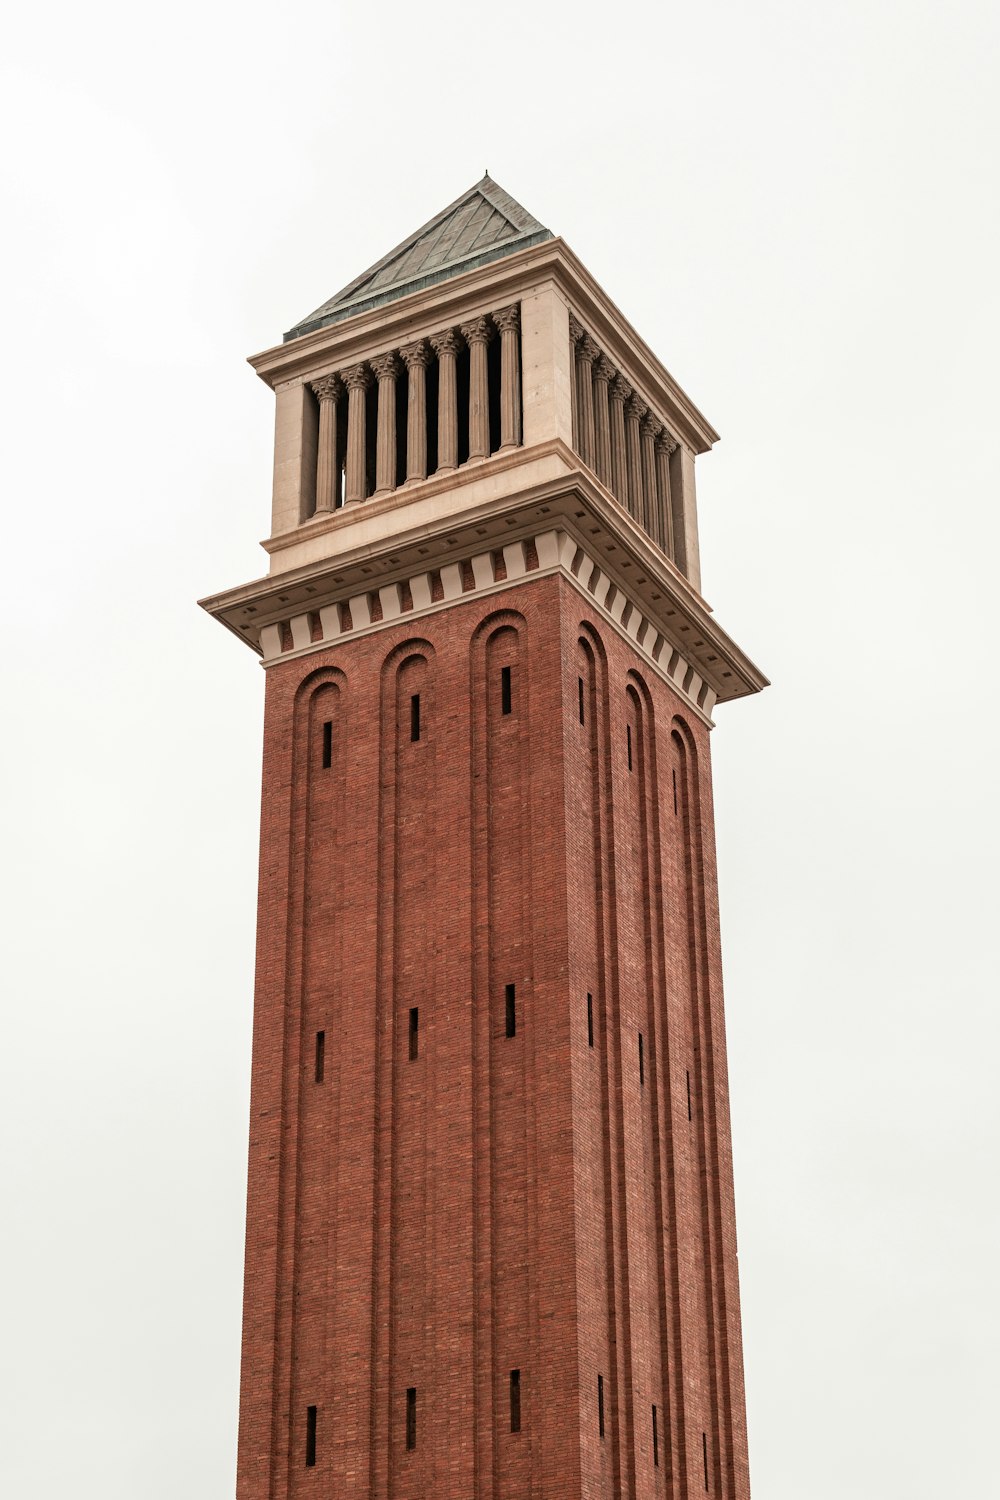 a tall brick tower